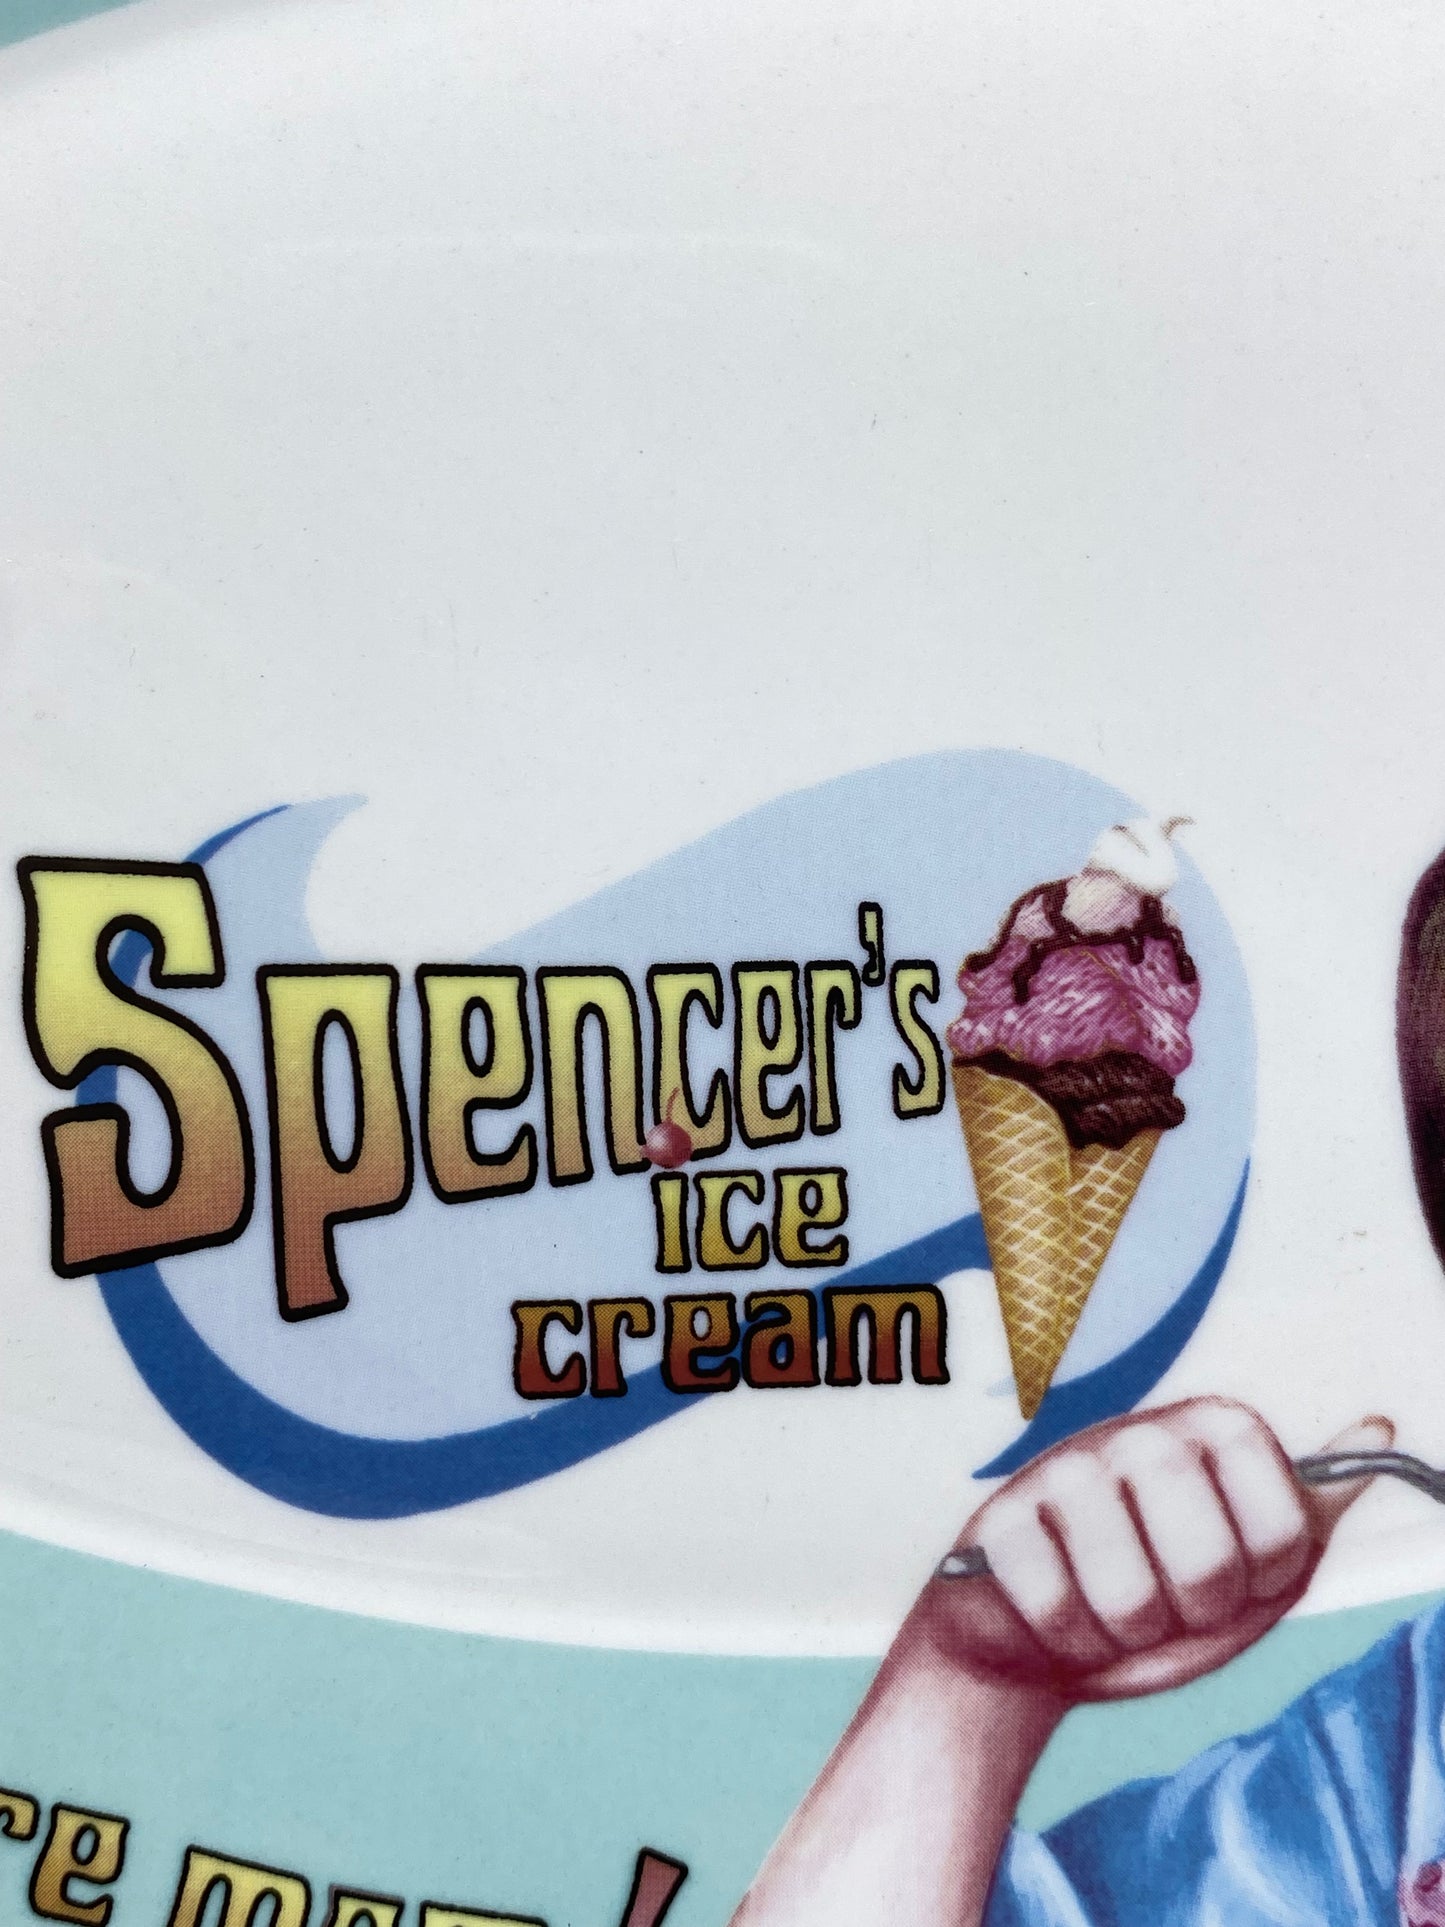 Villeroy & Boch 1748 - Spencer’s Ice Cream - 1990s plate